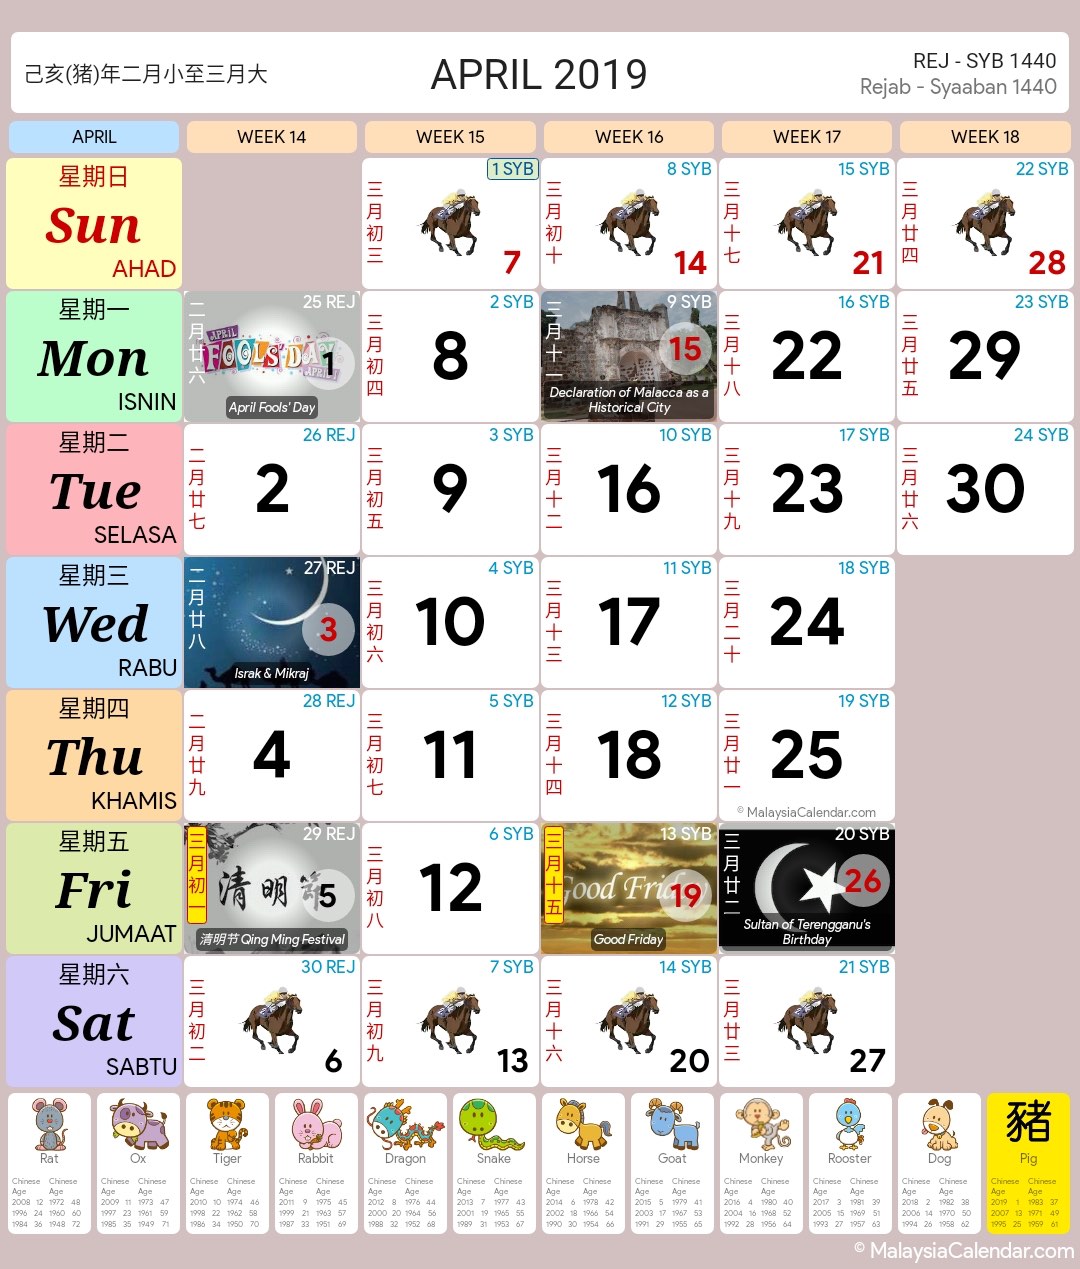 Malaysia Calendar Blog